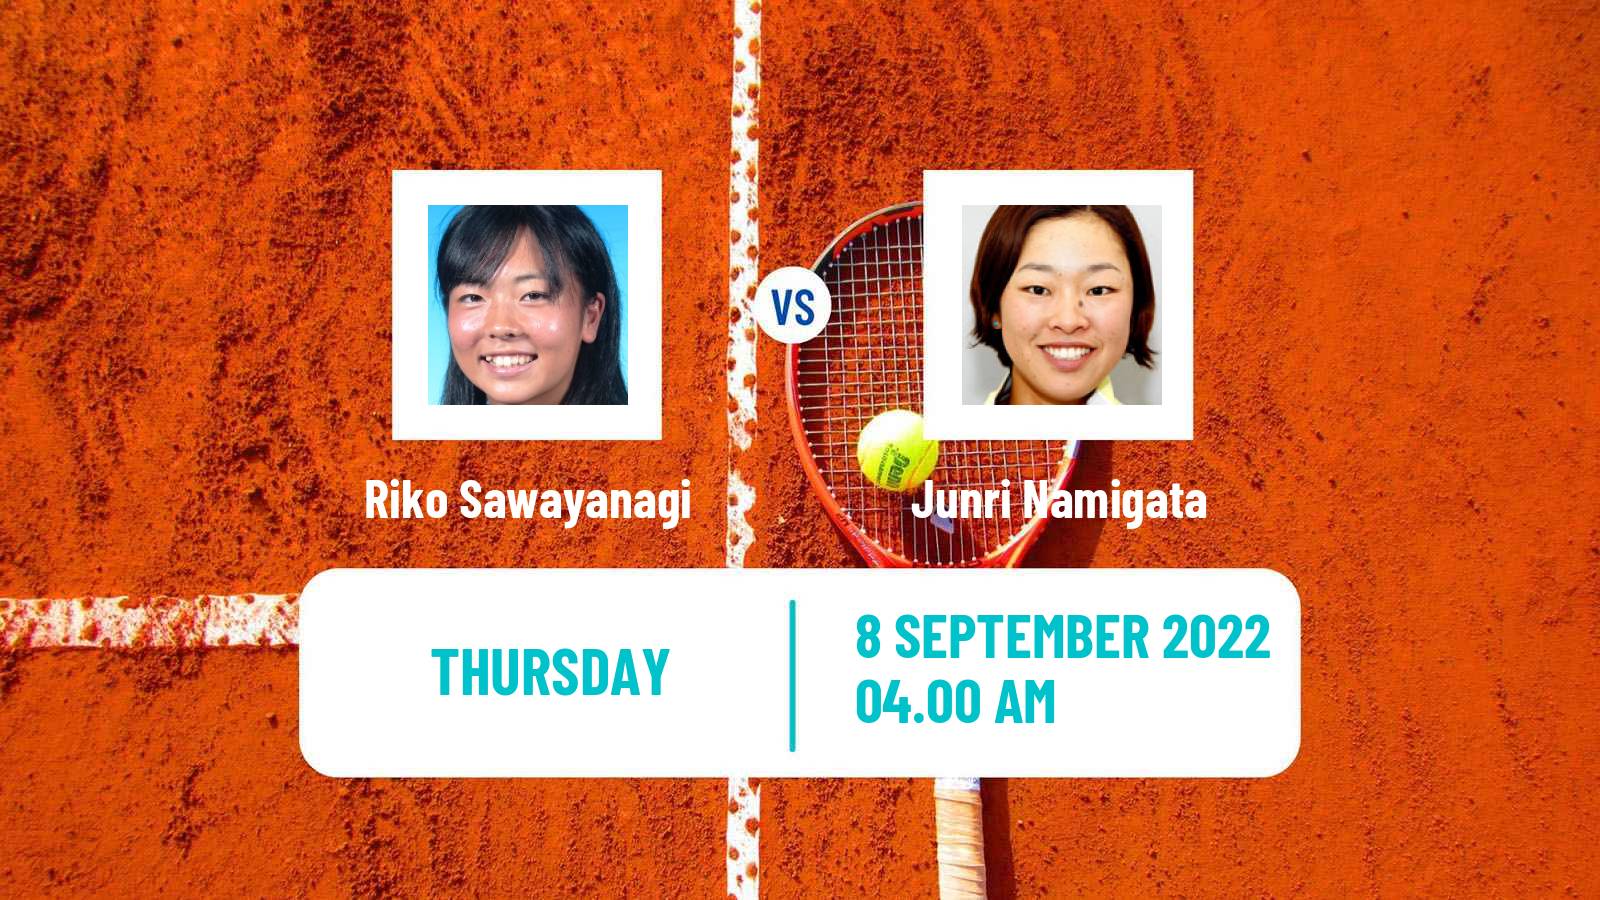 Tennis ITF Tournaments Riko Sawayanagi - Junri Namigata